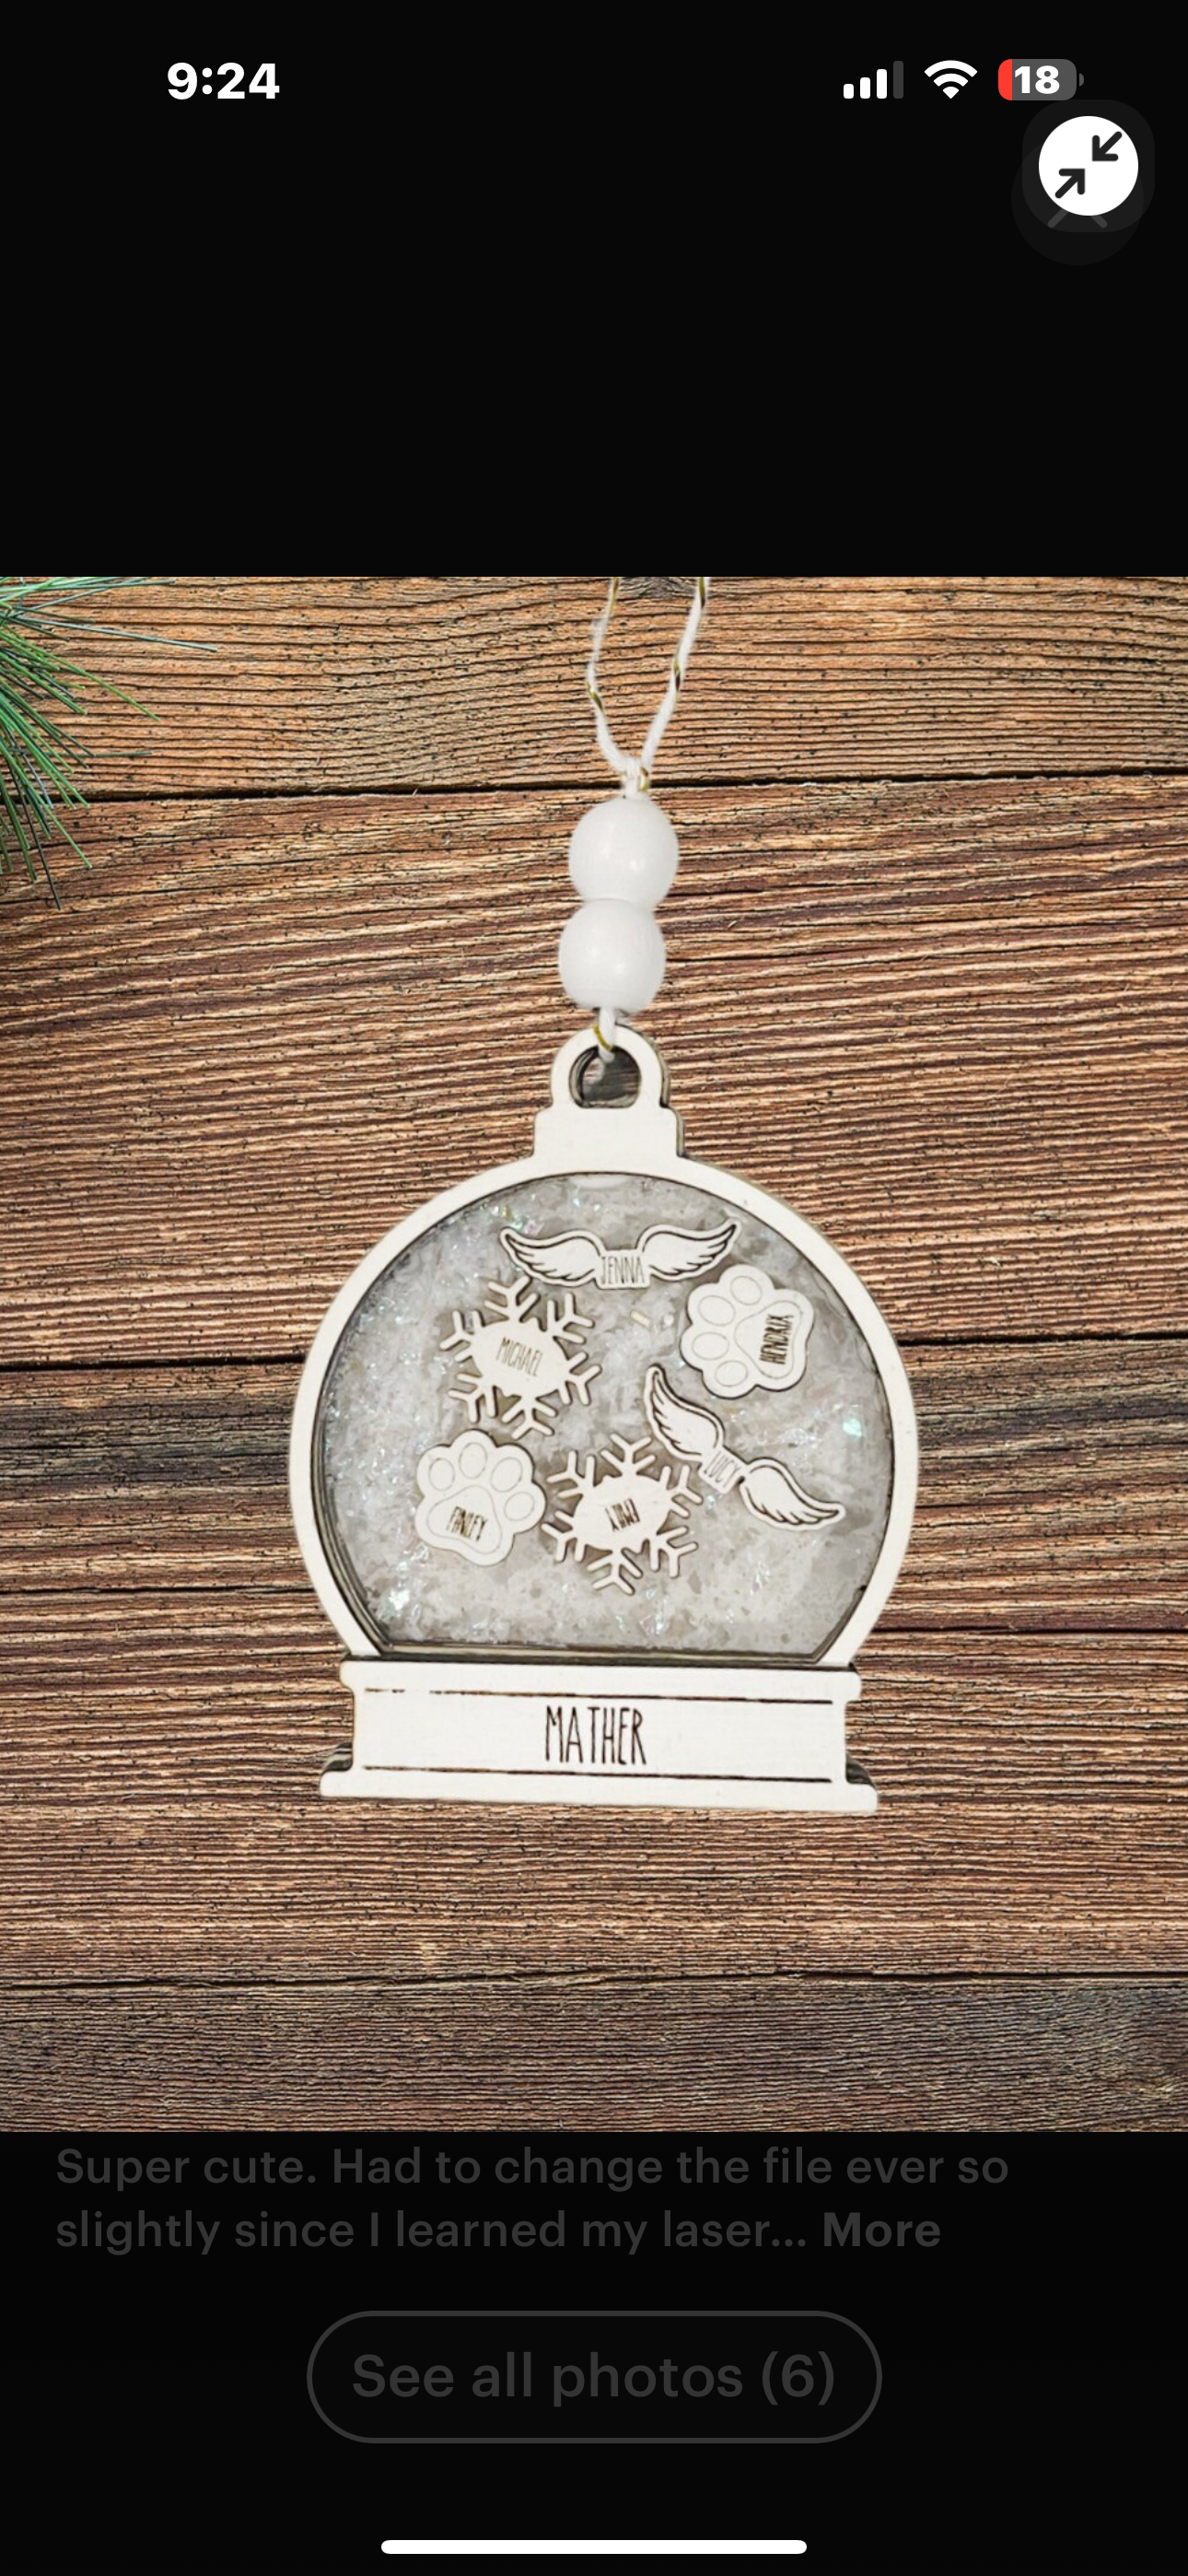 Snow Globe Ornament